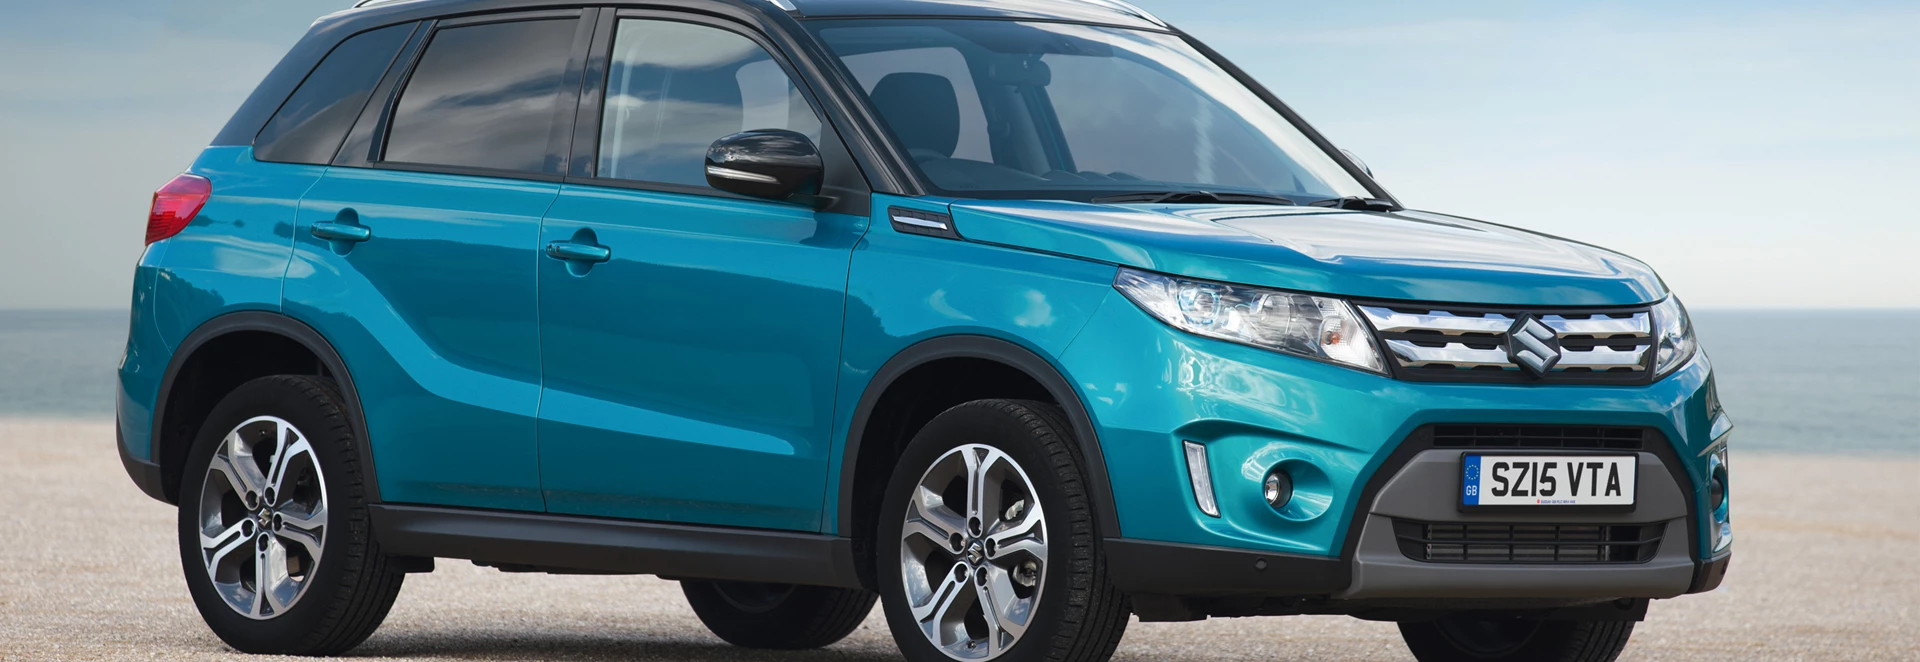 Five-star crash rating for Suzuki Vitara 